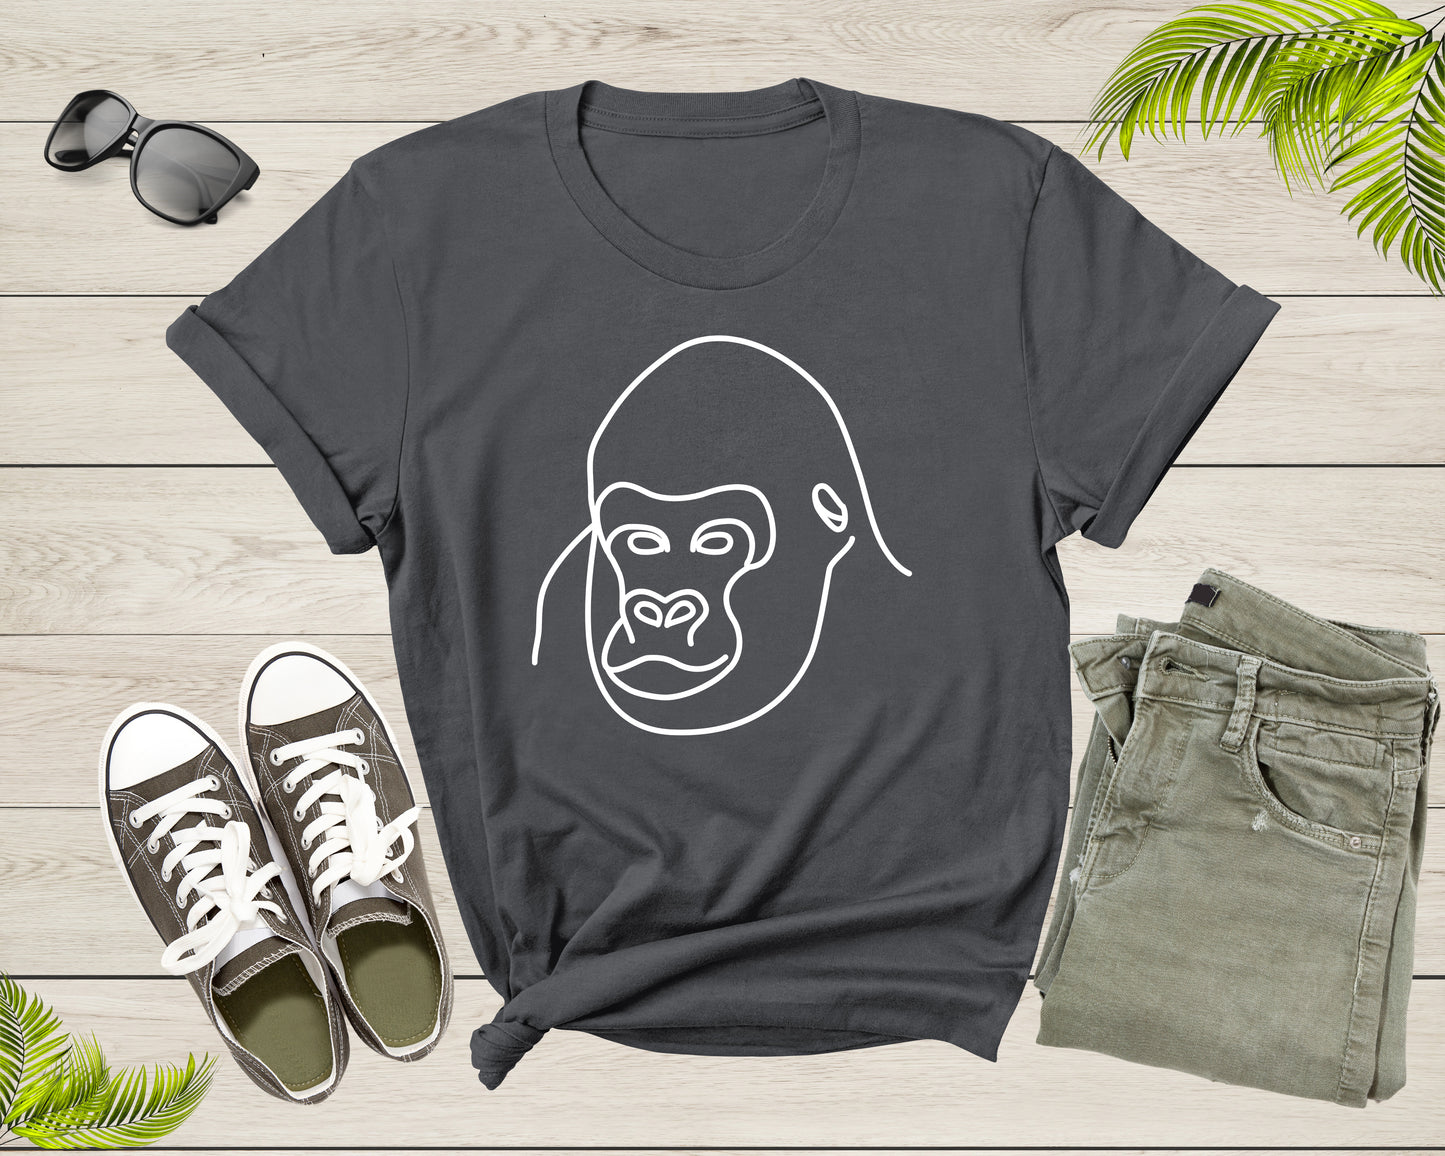 Cool Gorilla Lover Tshirt Design Gift For Adult Men Women Boys Girl Funny Gorilla Animal Graphic Present Shirt Gift Idea Gorilla Gym T-shirt